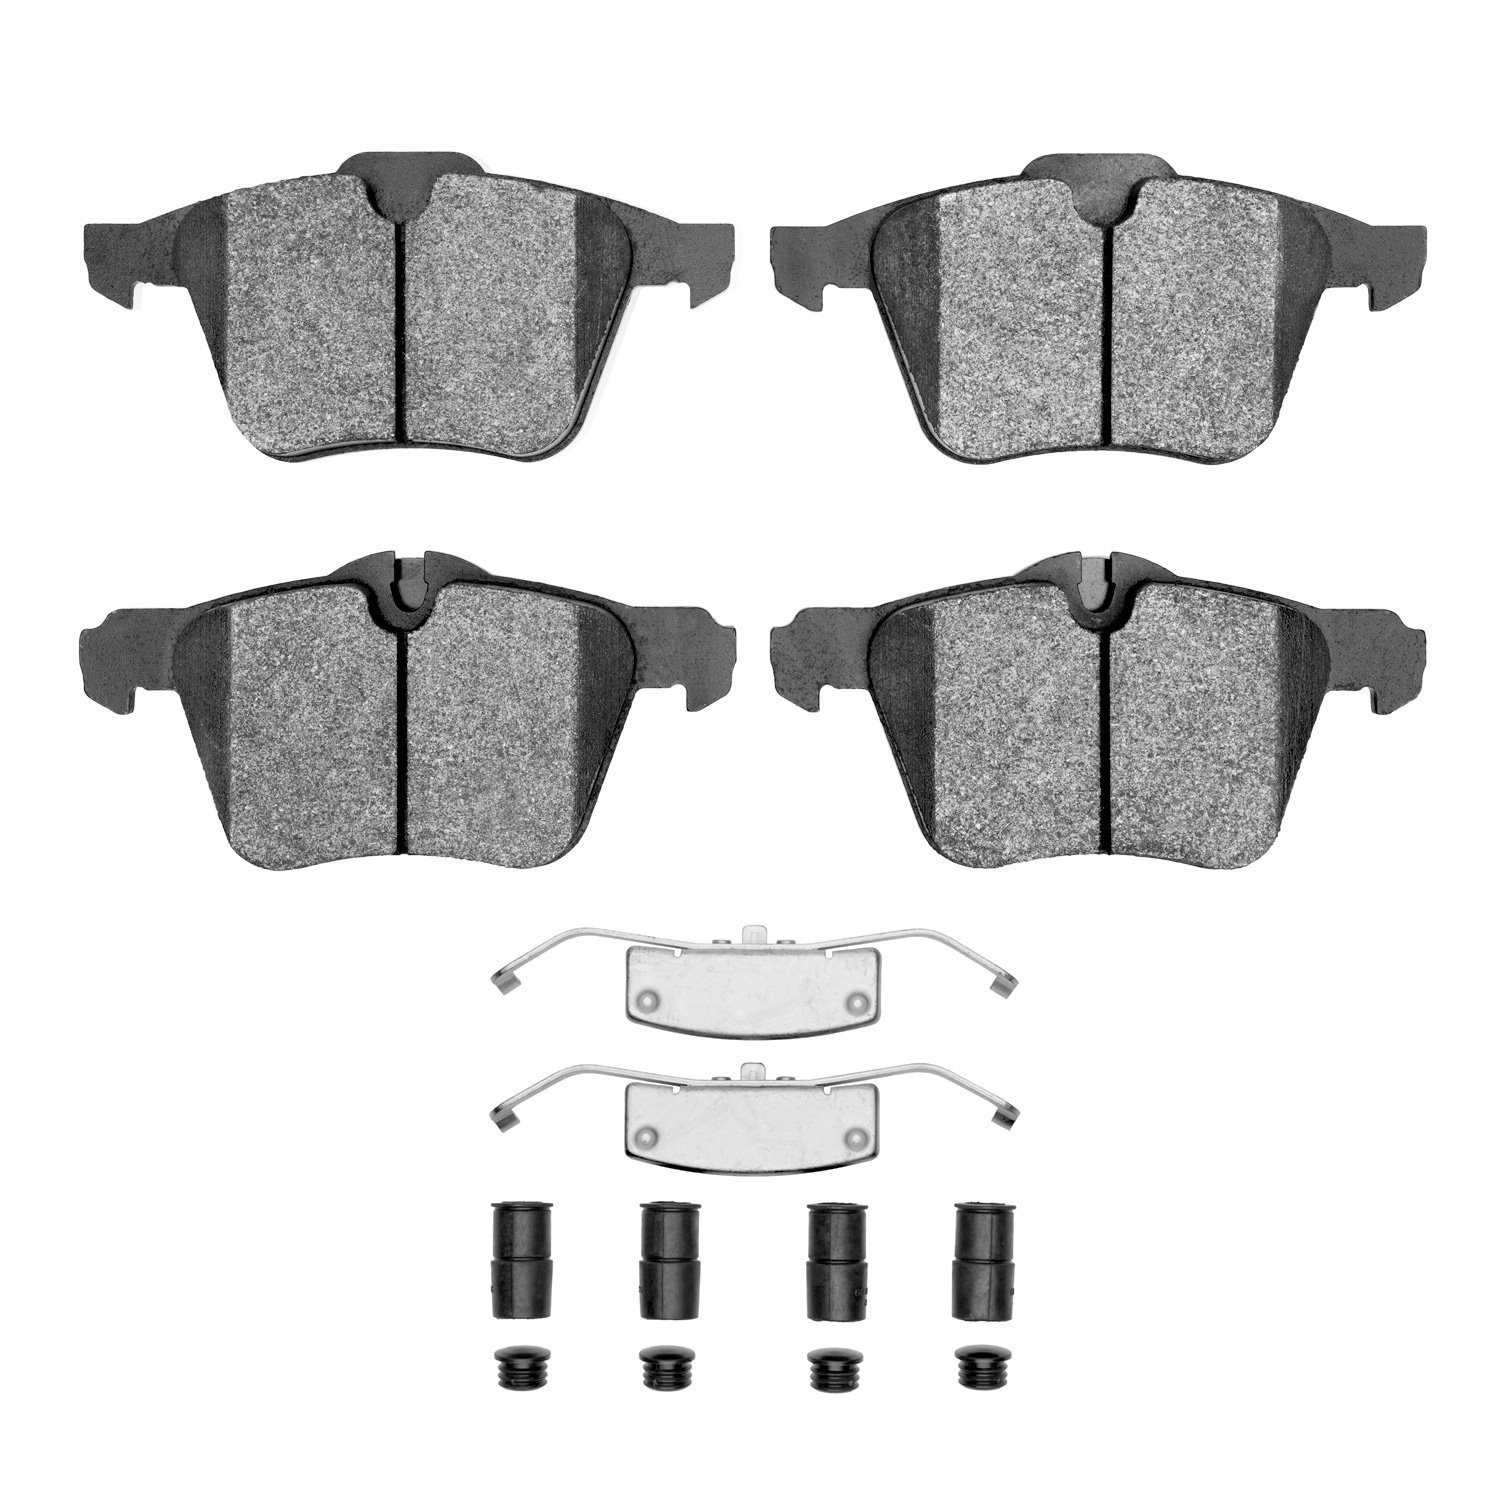 Semi-Metallic Brake Pads & Hardware Kit, 2007-2018 Fits Multiple Makes/Models, Position: Front